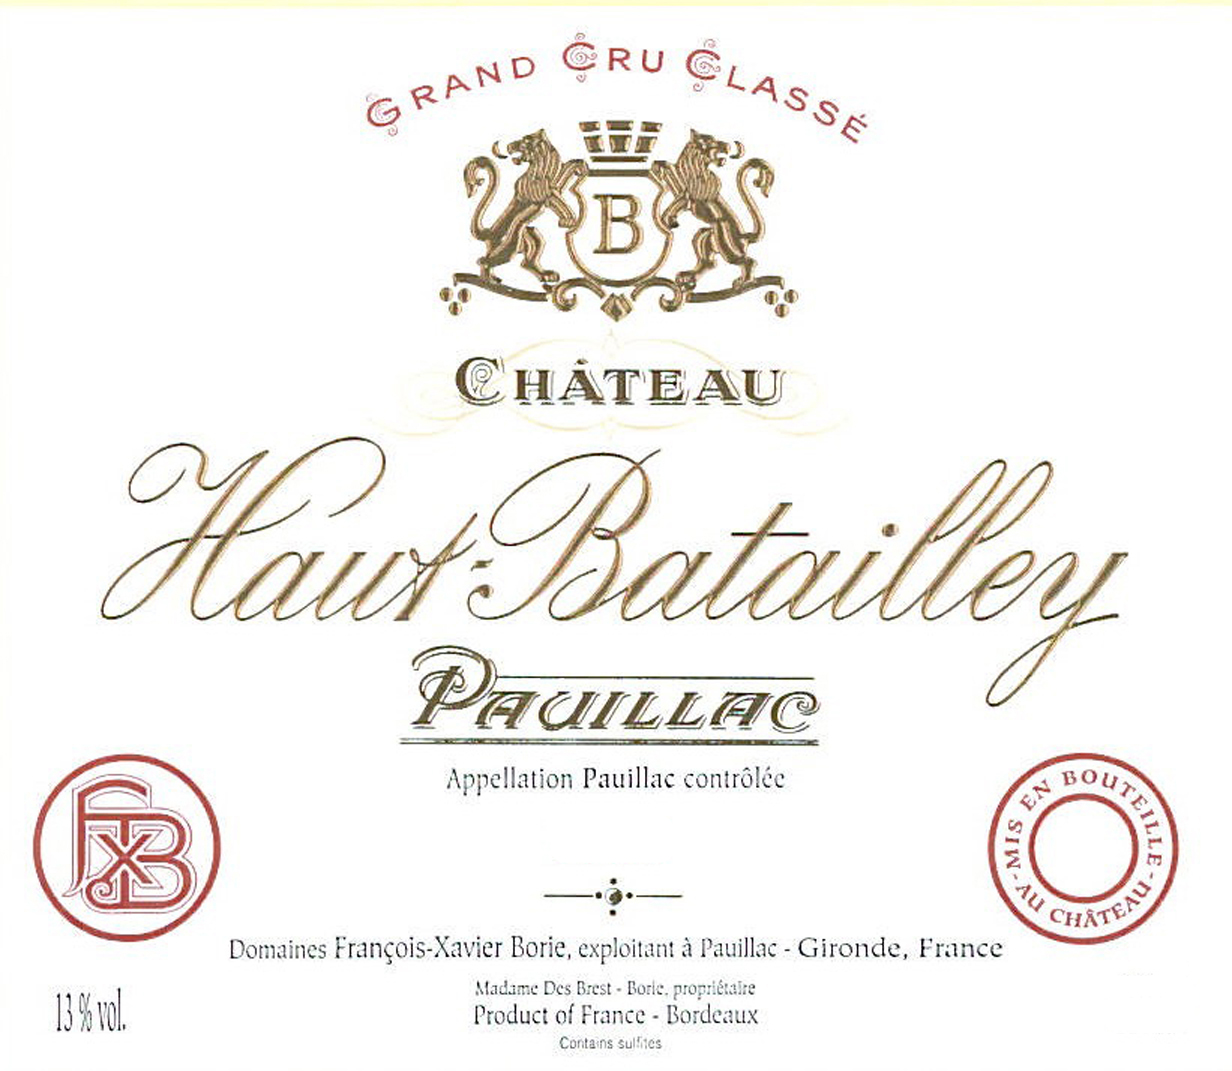 Chateau Haut-Batailley label